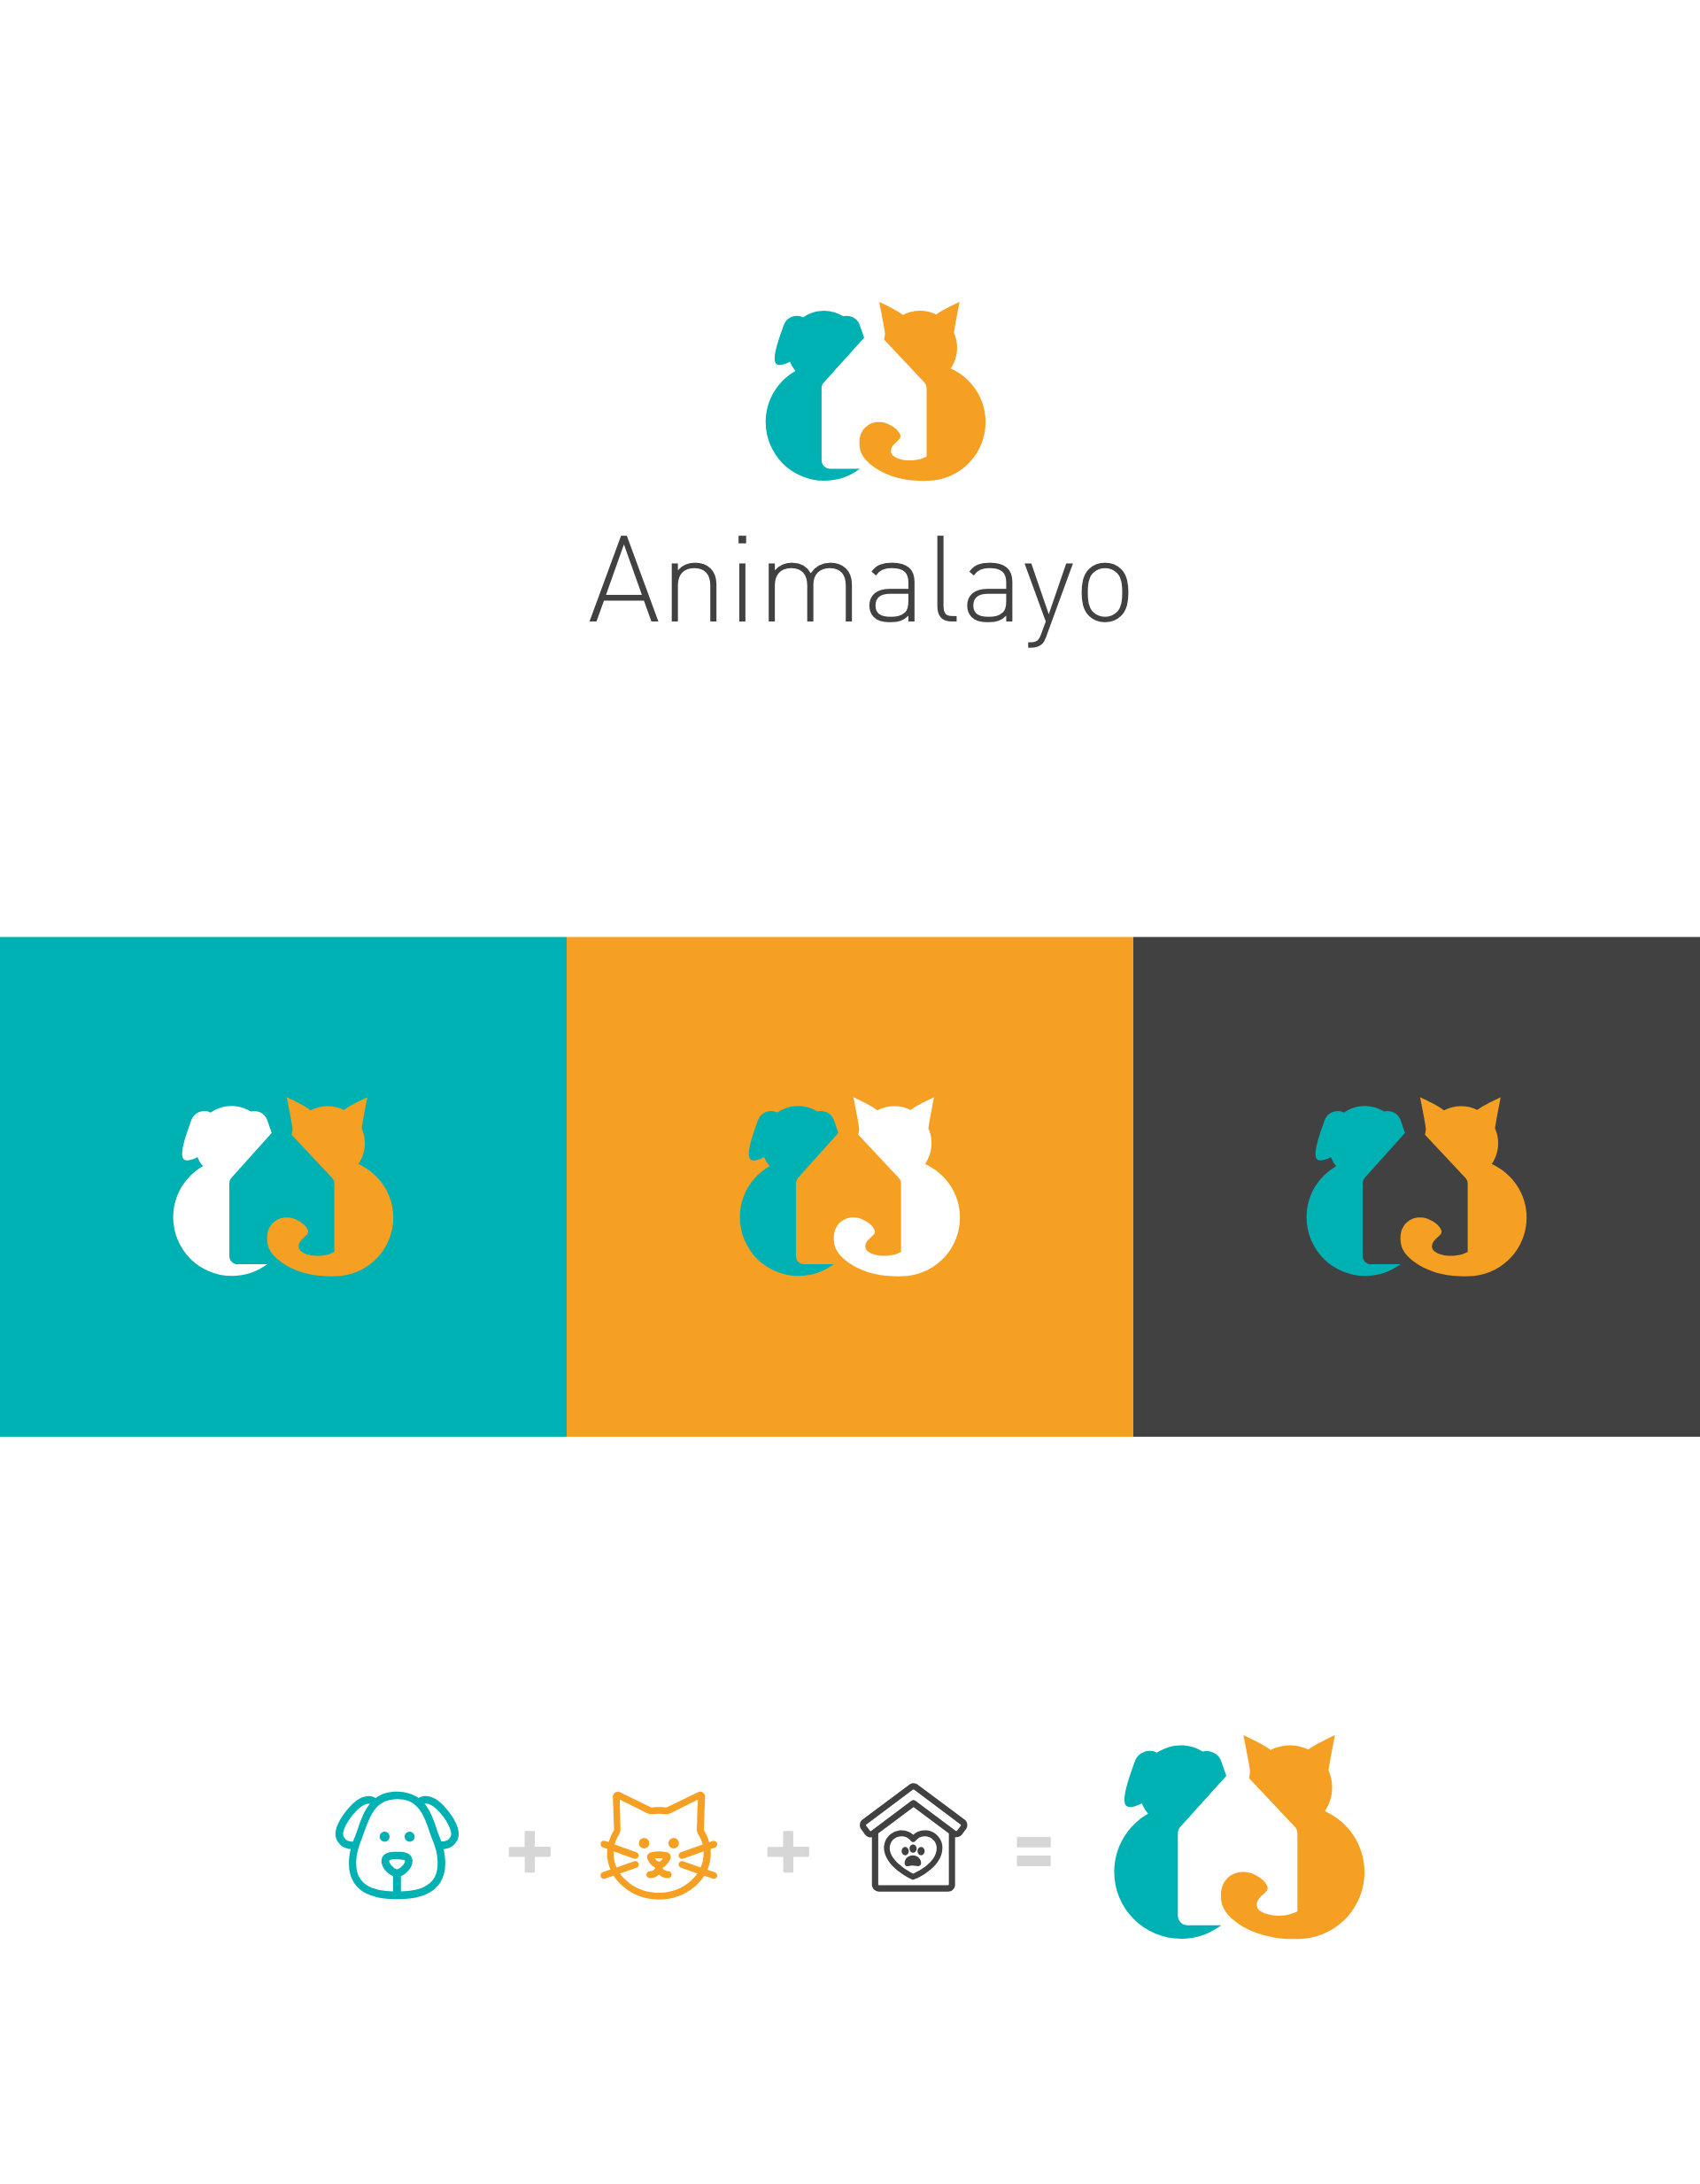 Animalayo